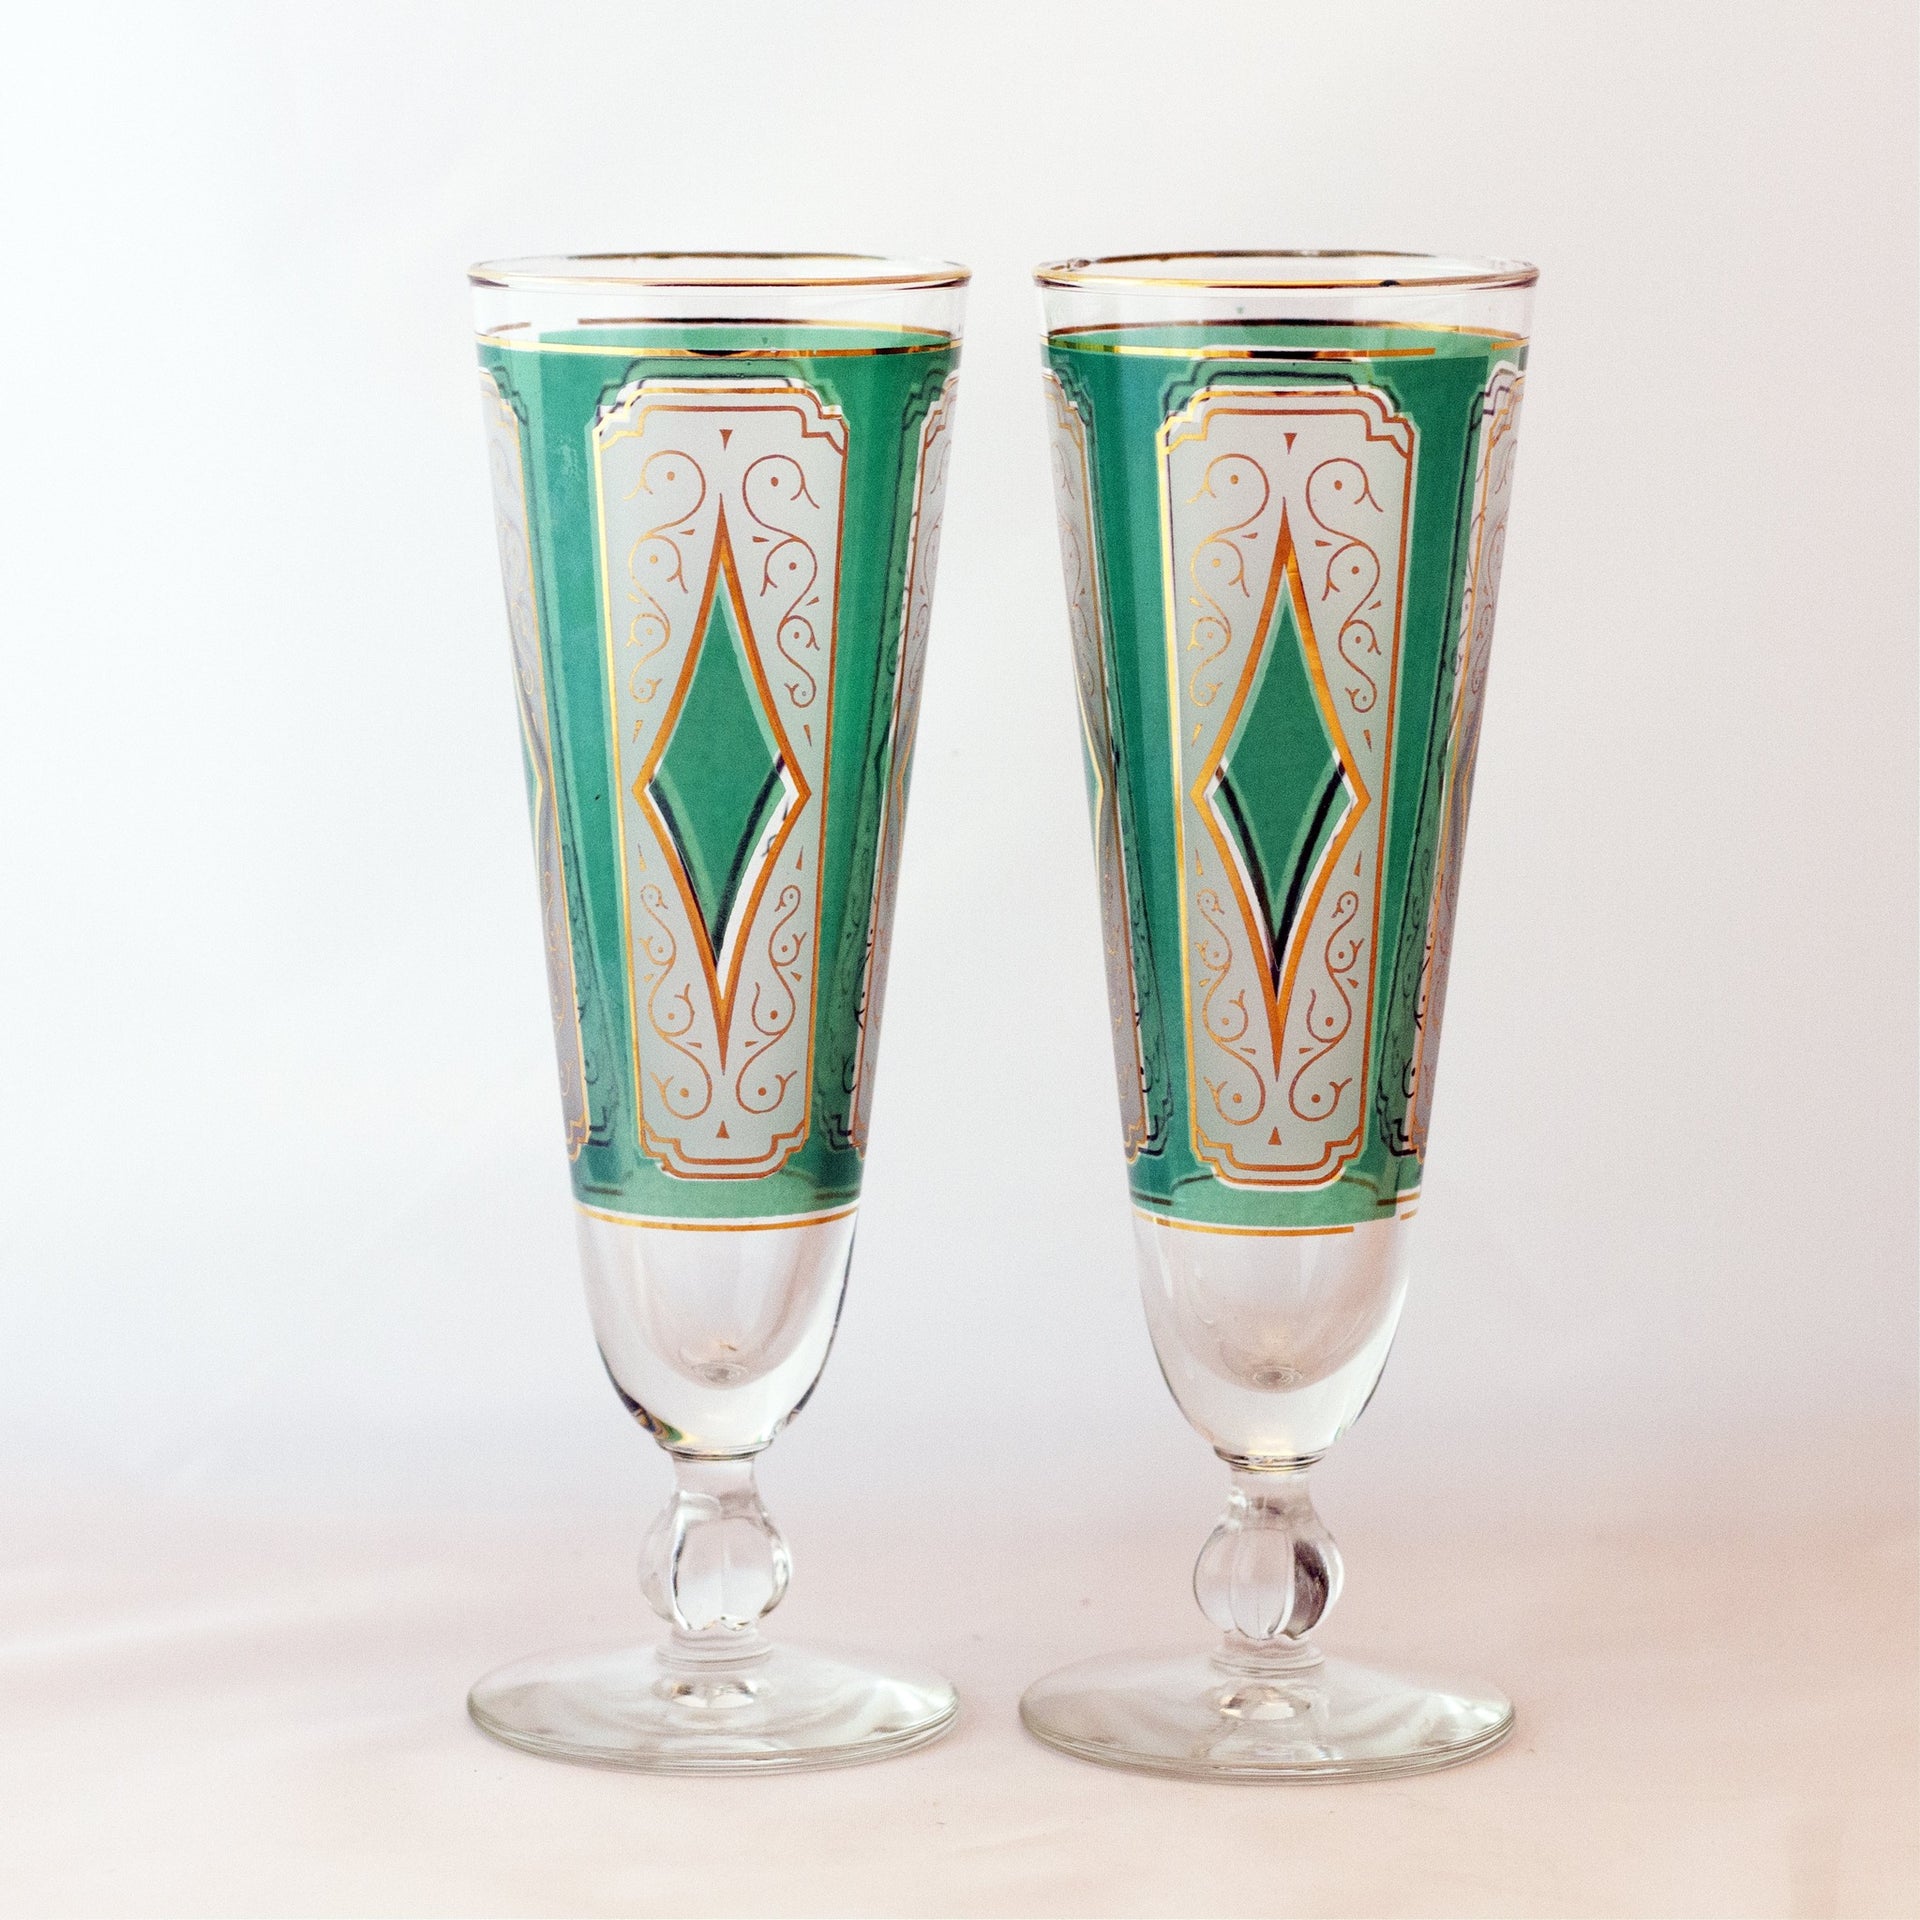 Libbey Mid-Century Emerald Champagne/ Pilsner Glasses (Set of 6)